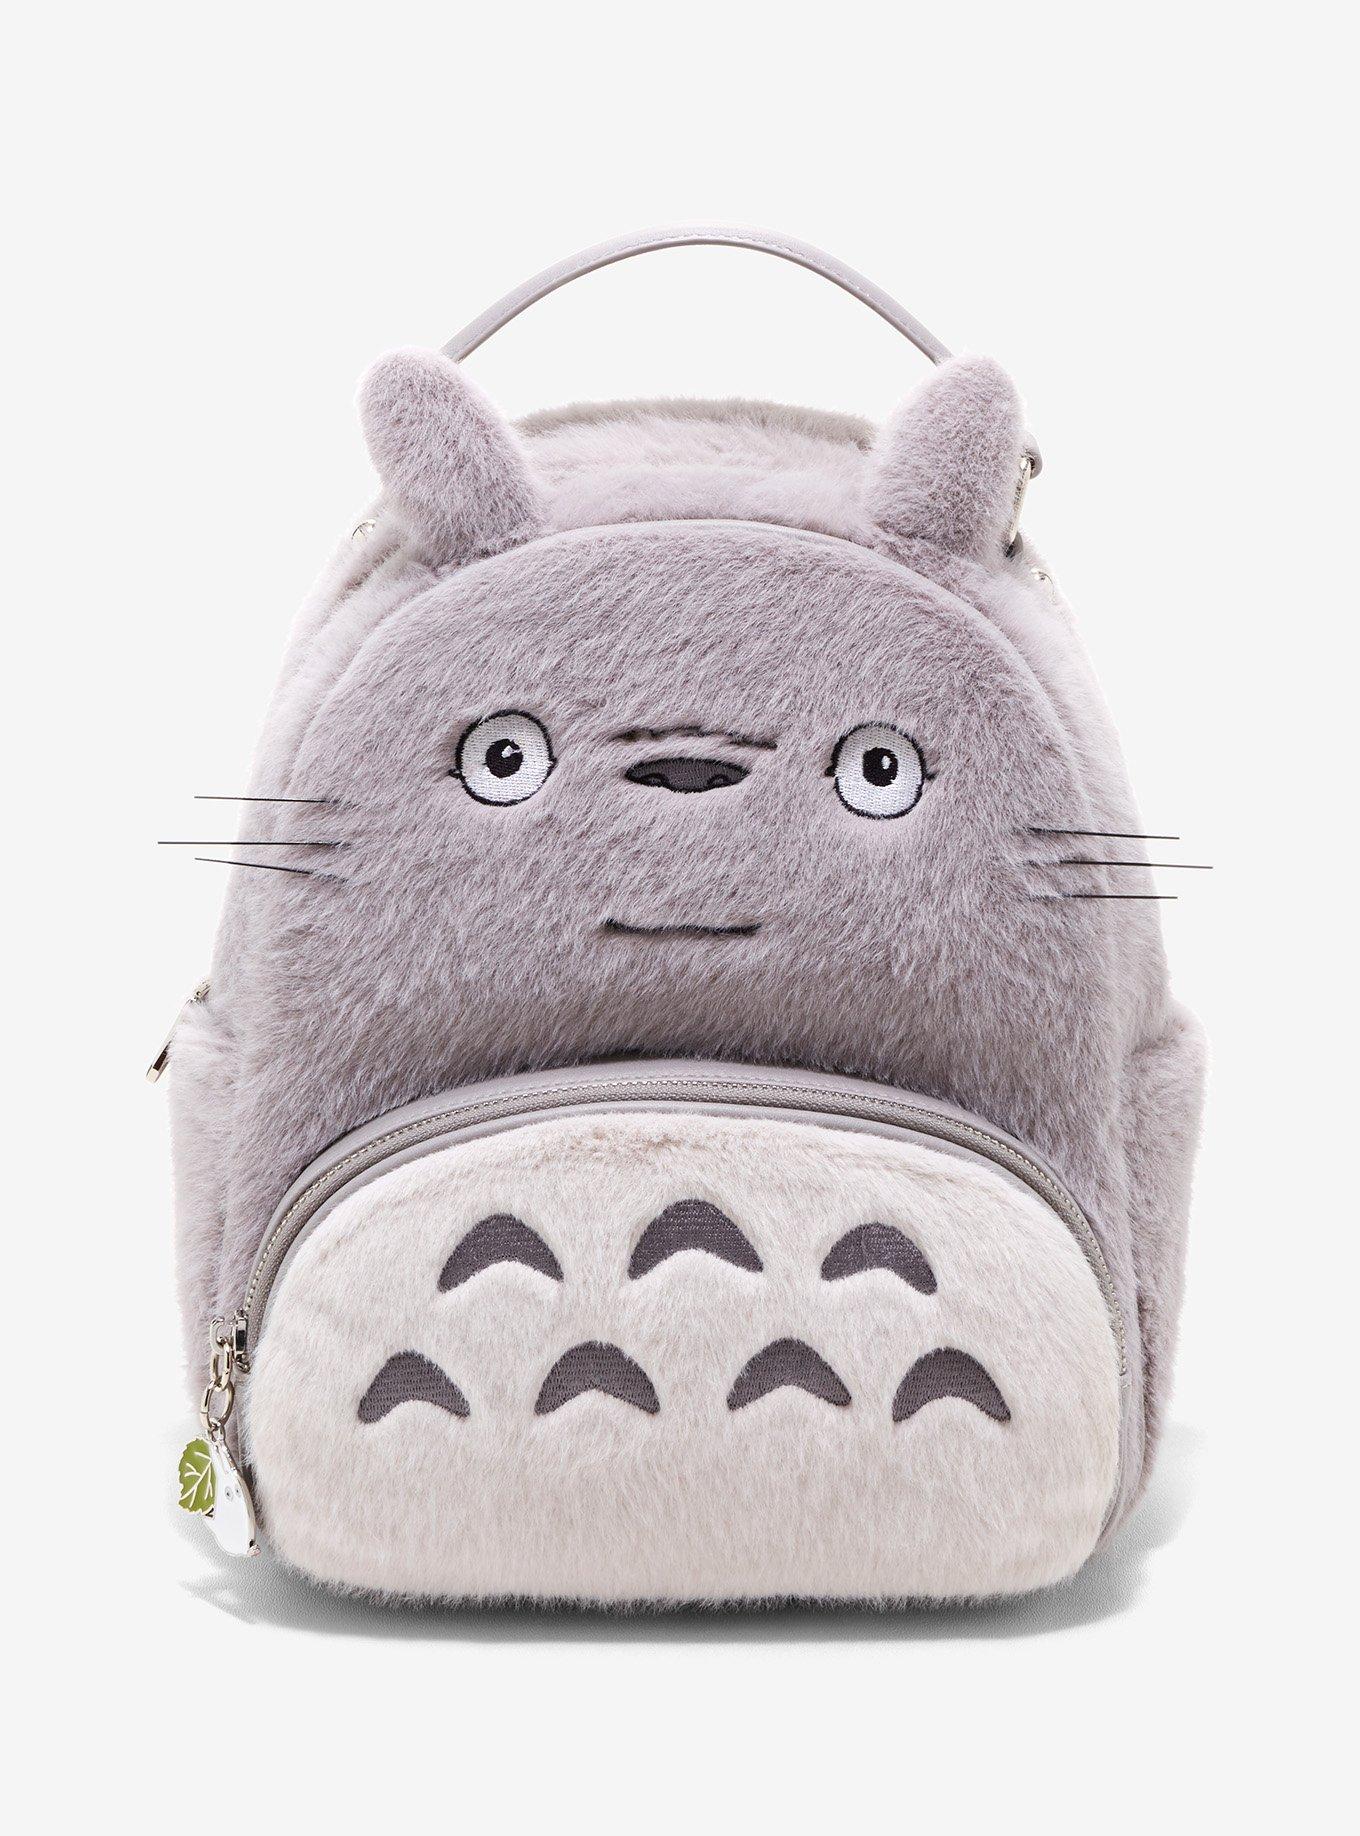 Despicable Me Minions Kawaii Cartoon Bag Anime Plush Backpack Bags for Kids